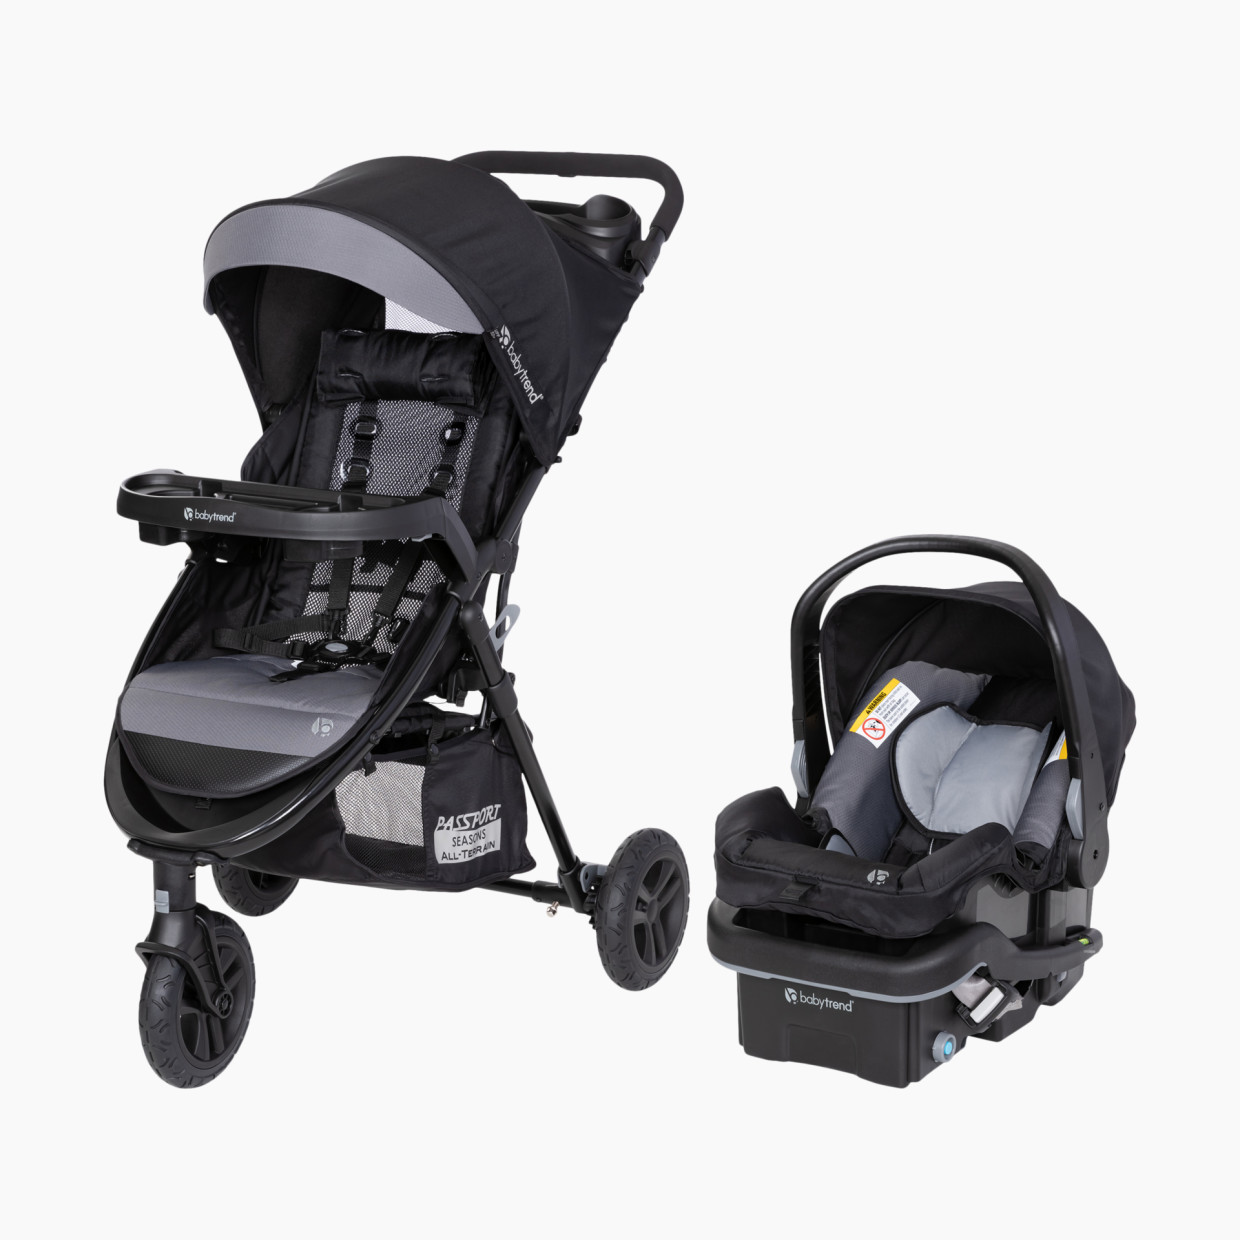 Baby Trend Passport Seasons All-Terrain Travel System with EZ-Lift PLUS Infant Car Seat - Dash Black.